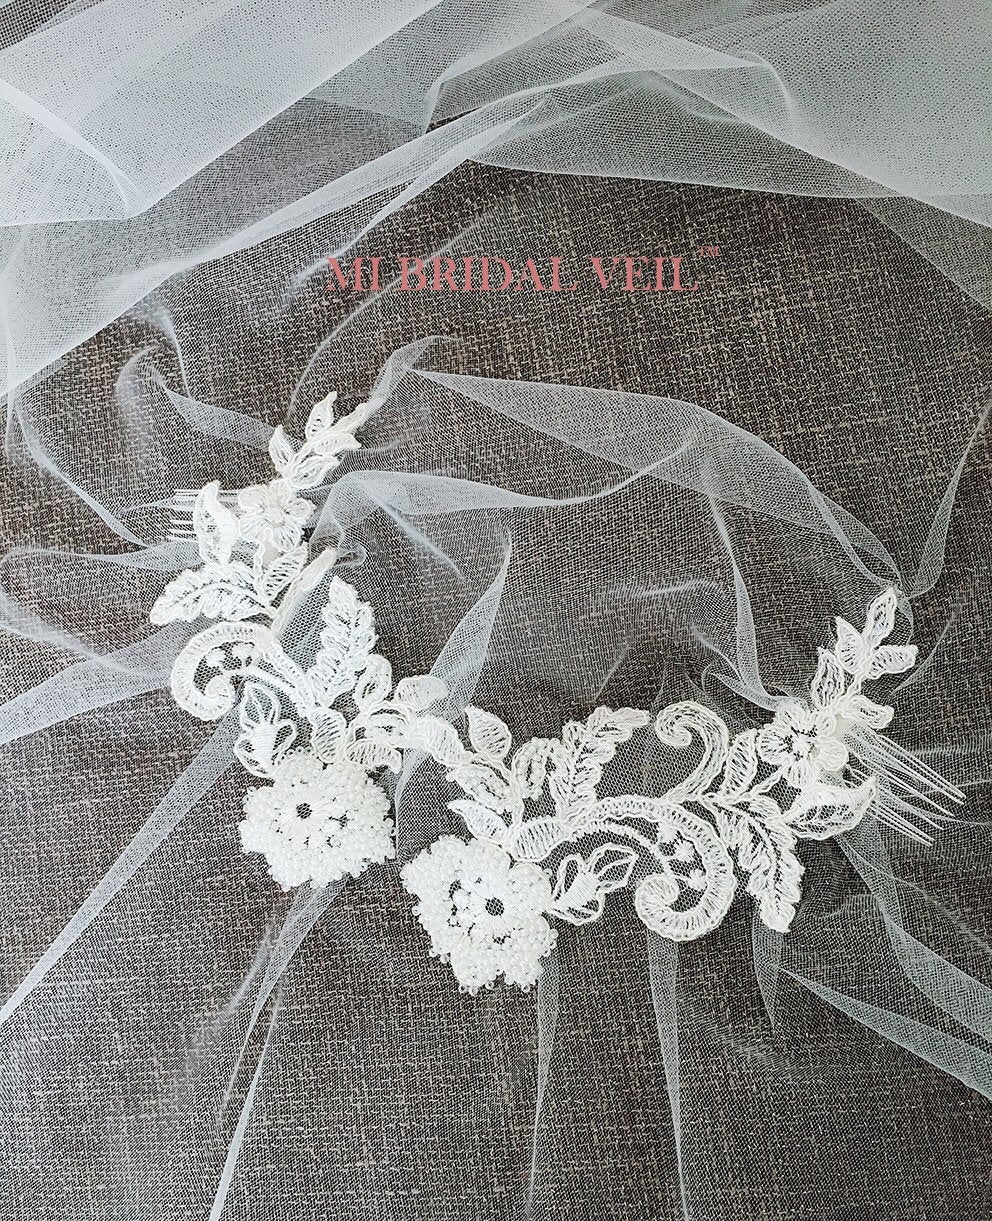 Beaded Juliet Cap Veil, Lace, Vintage Inspired Wedding Veil, Mi Bridal